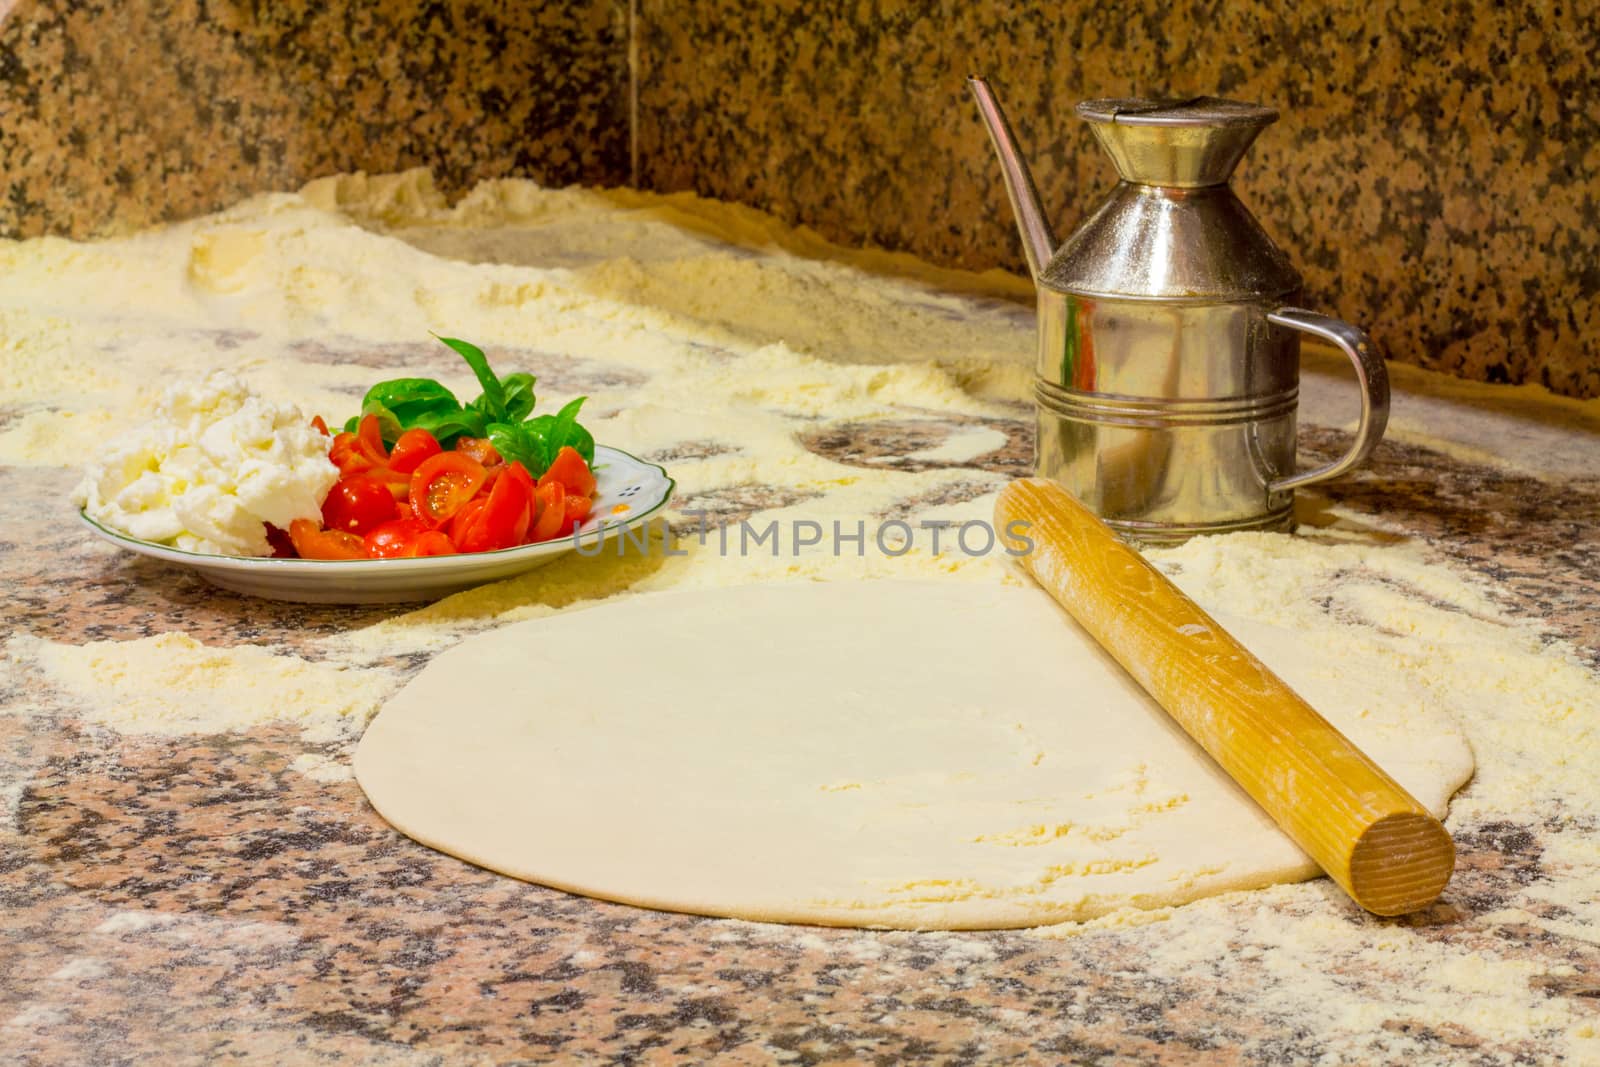 Make a typical italian food, dough, cheese, tomato, basil, flour